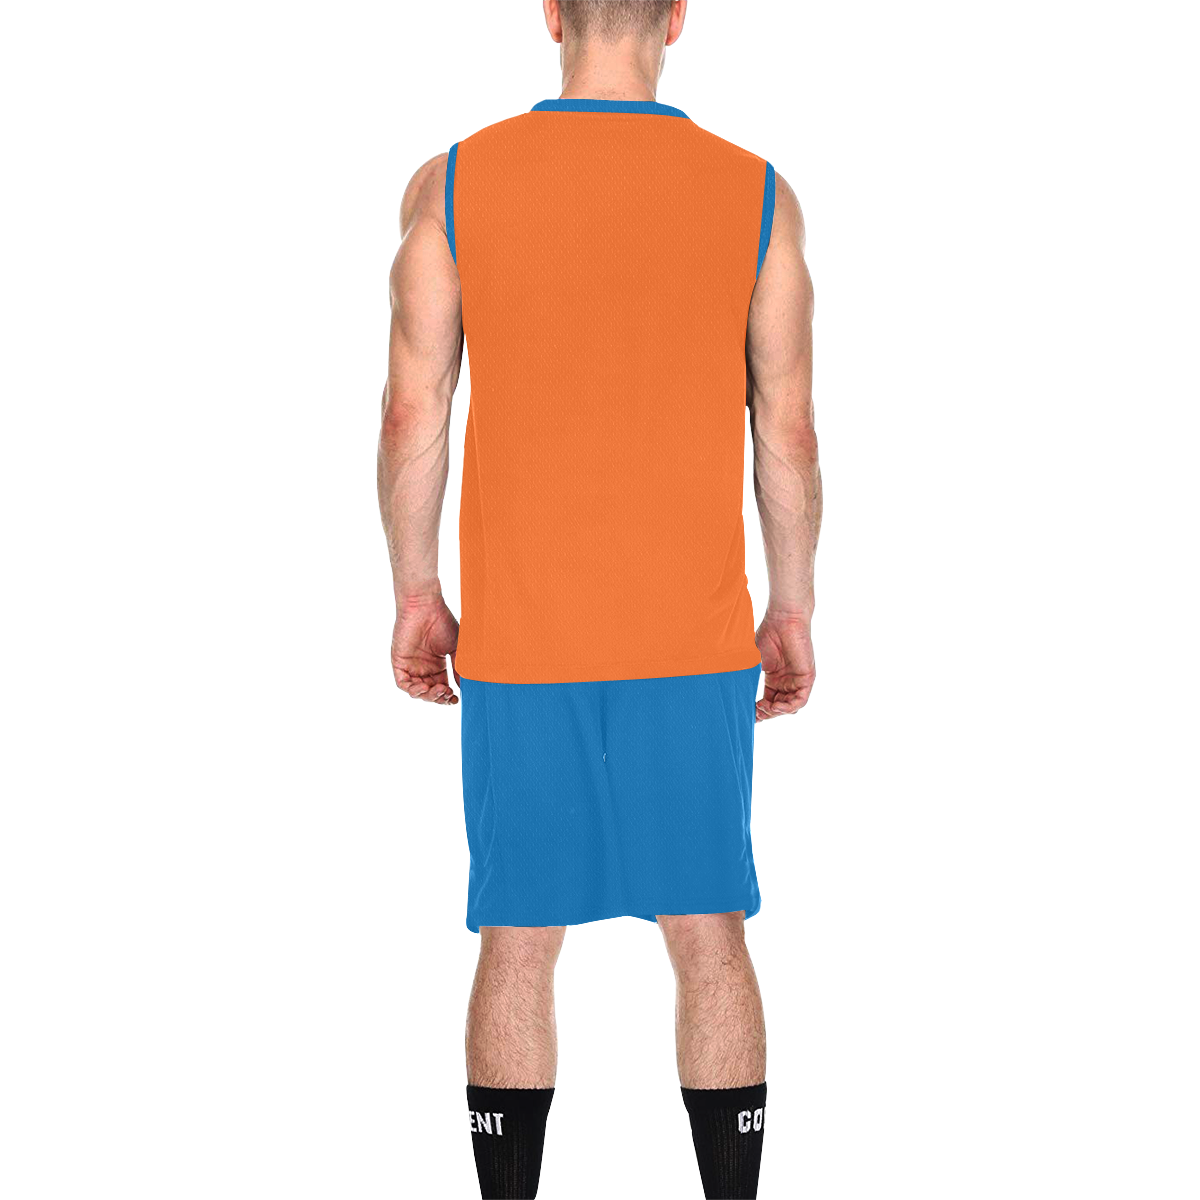 Basketball Sports Cyan Blue and Orange All Over Print Basketball Uniform